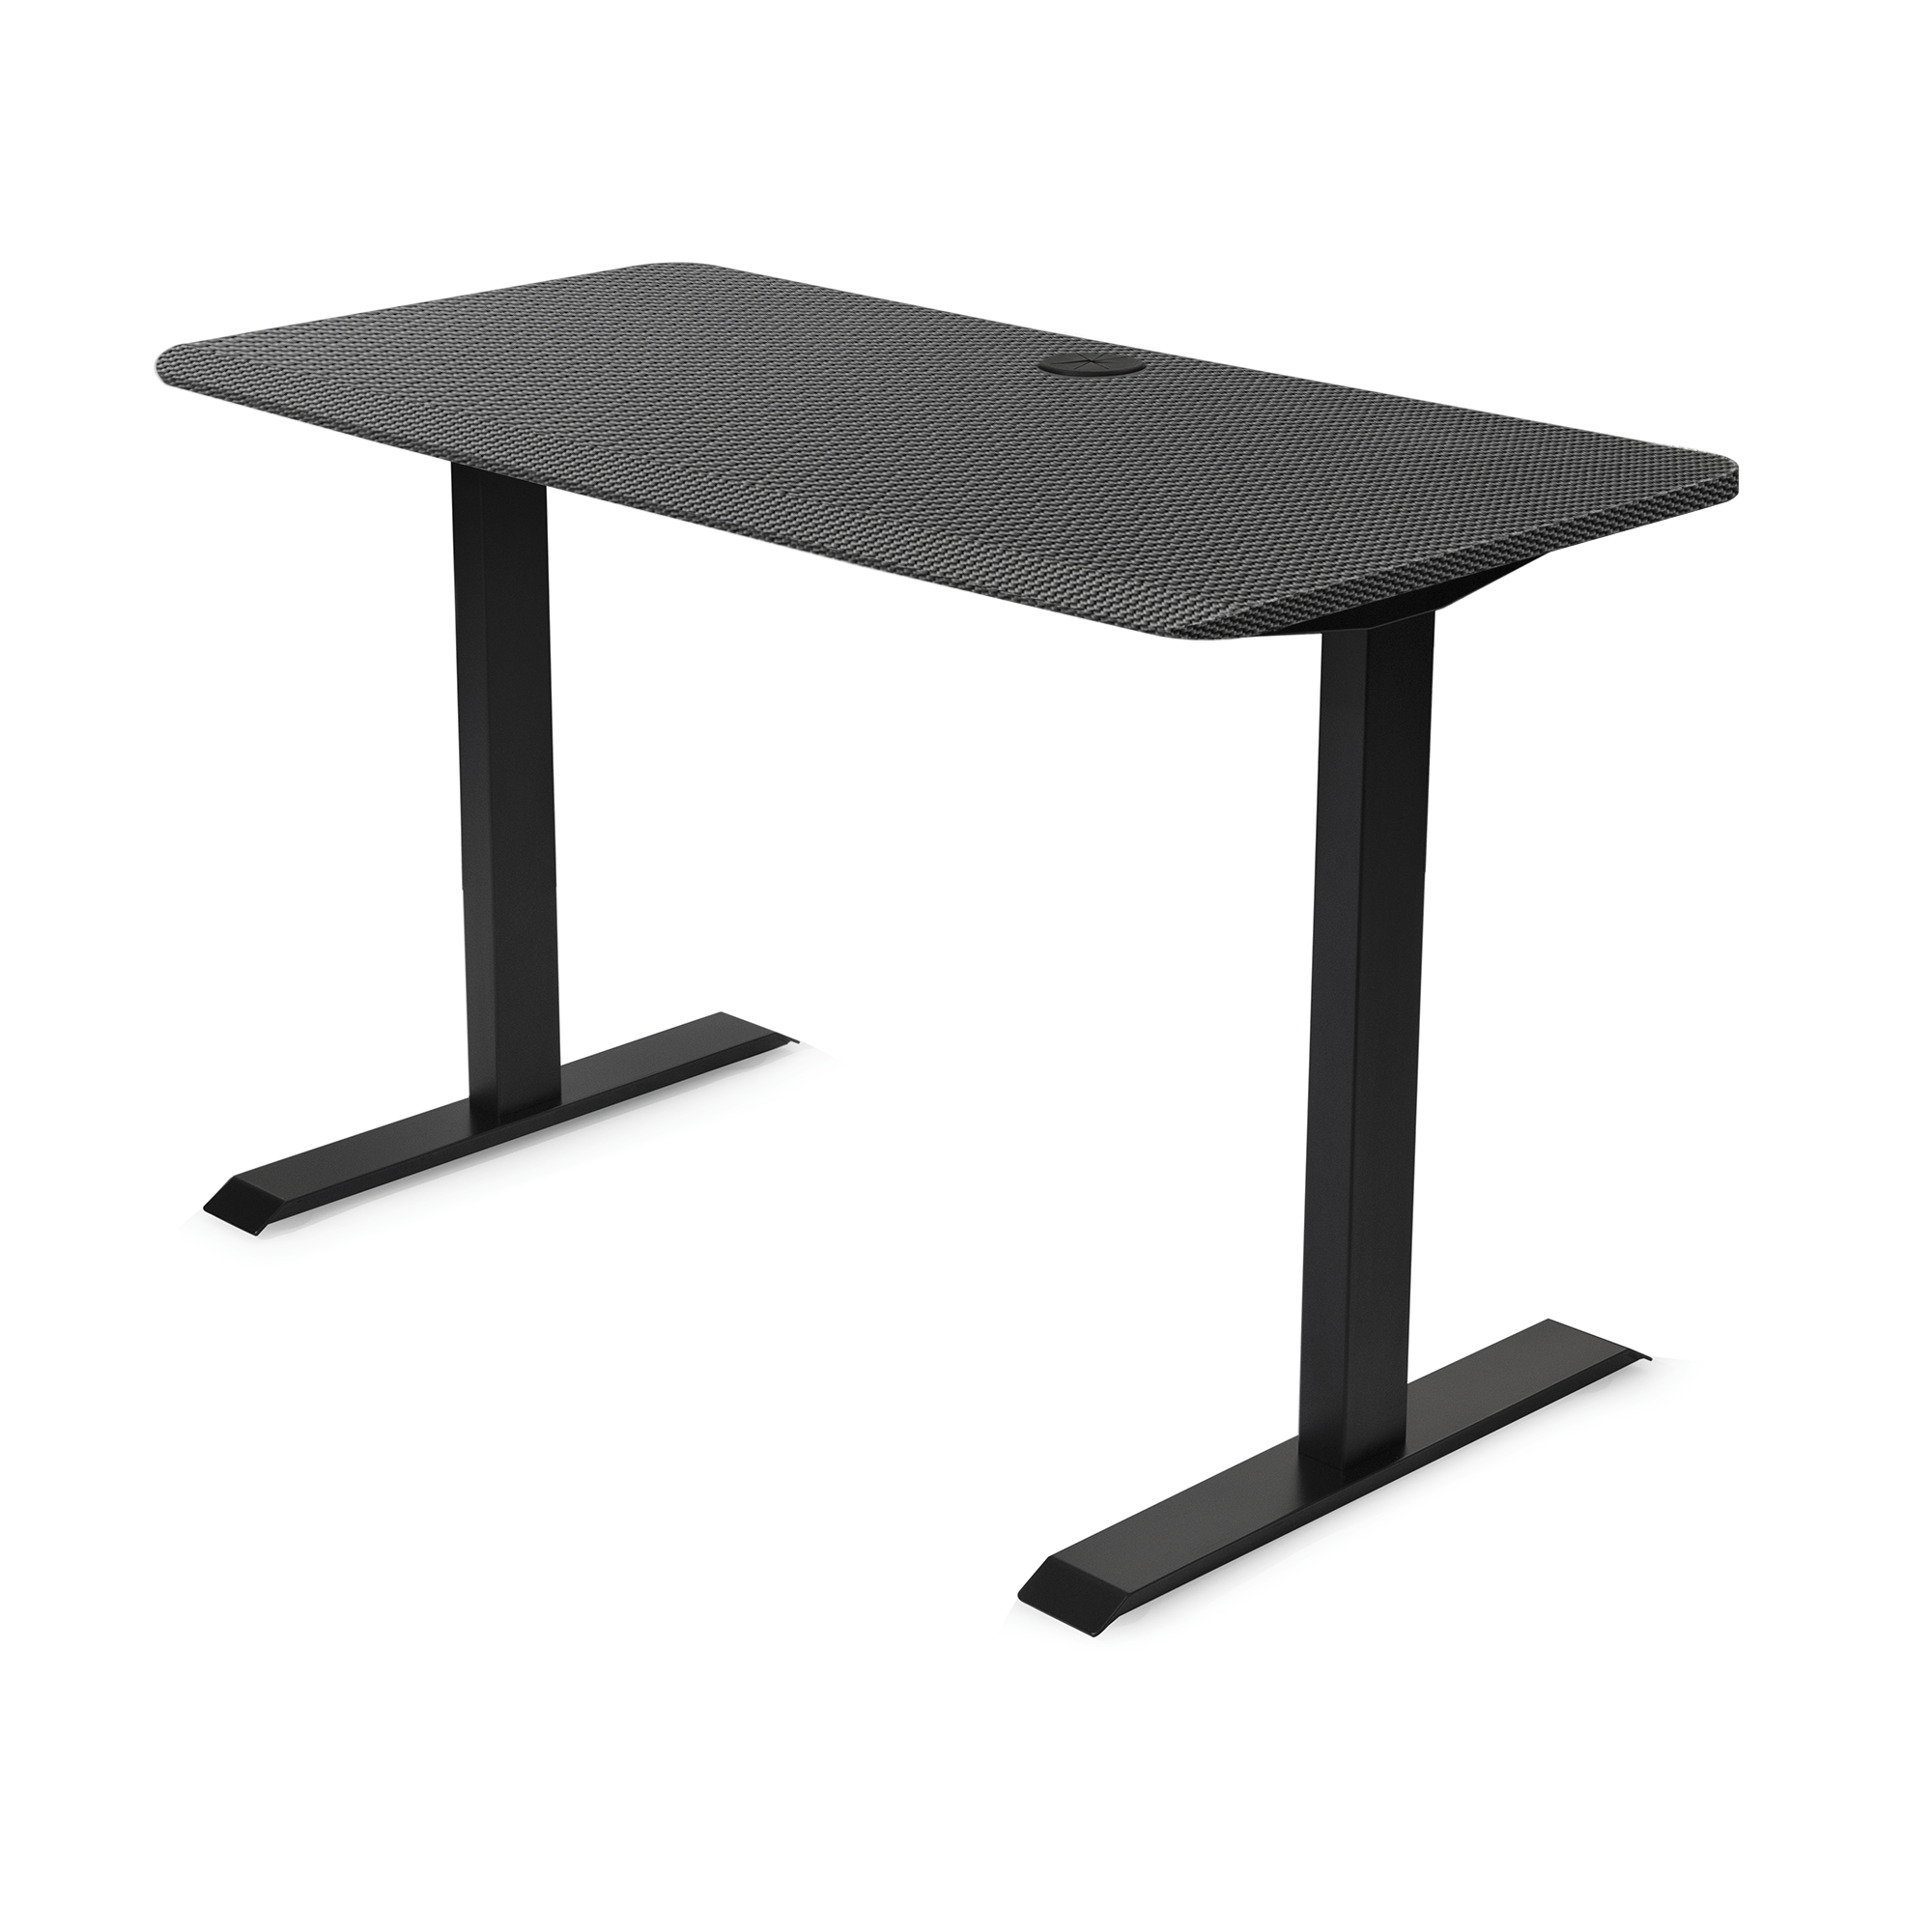 Mojo Side Table Non Epicor Workspace Tables Carbon Fiber / 48x24 / Black Base